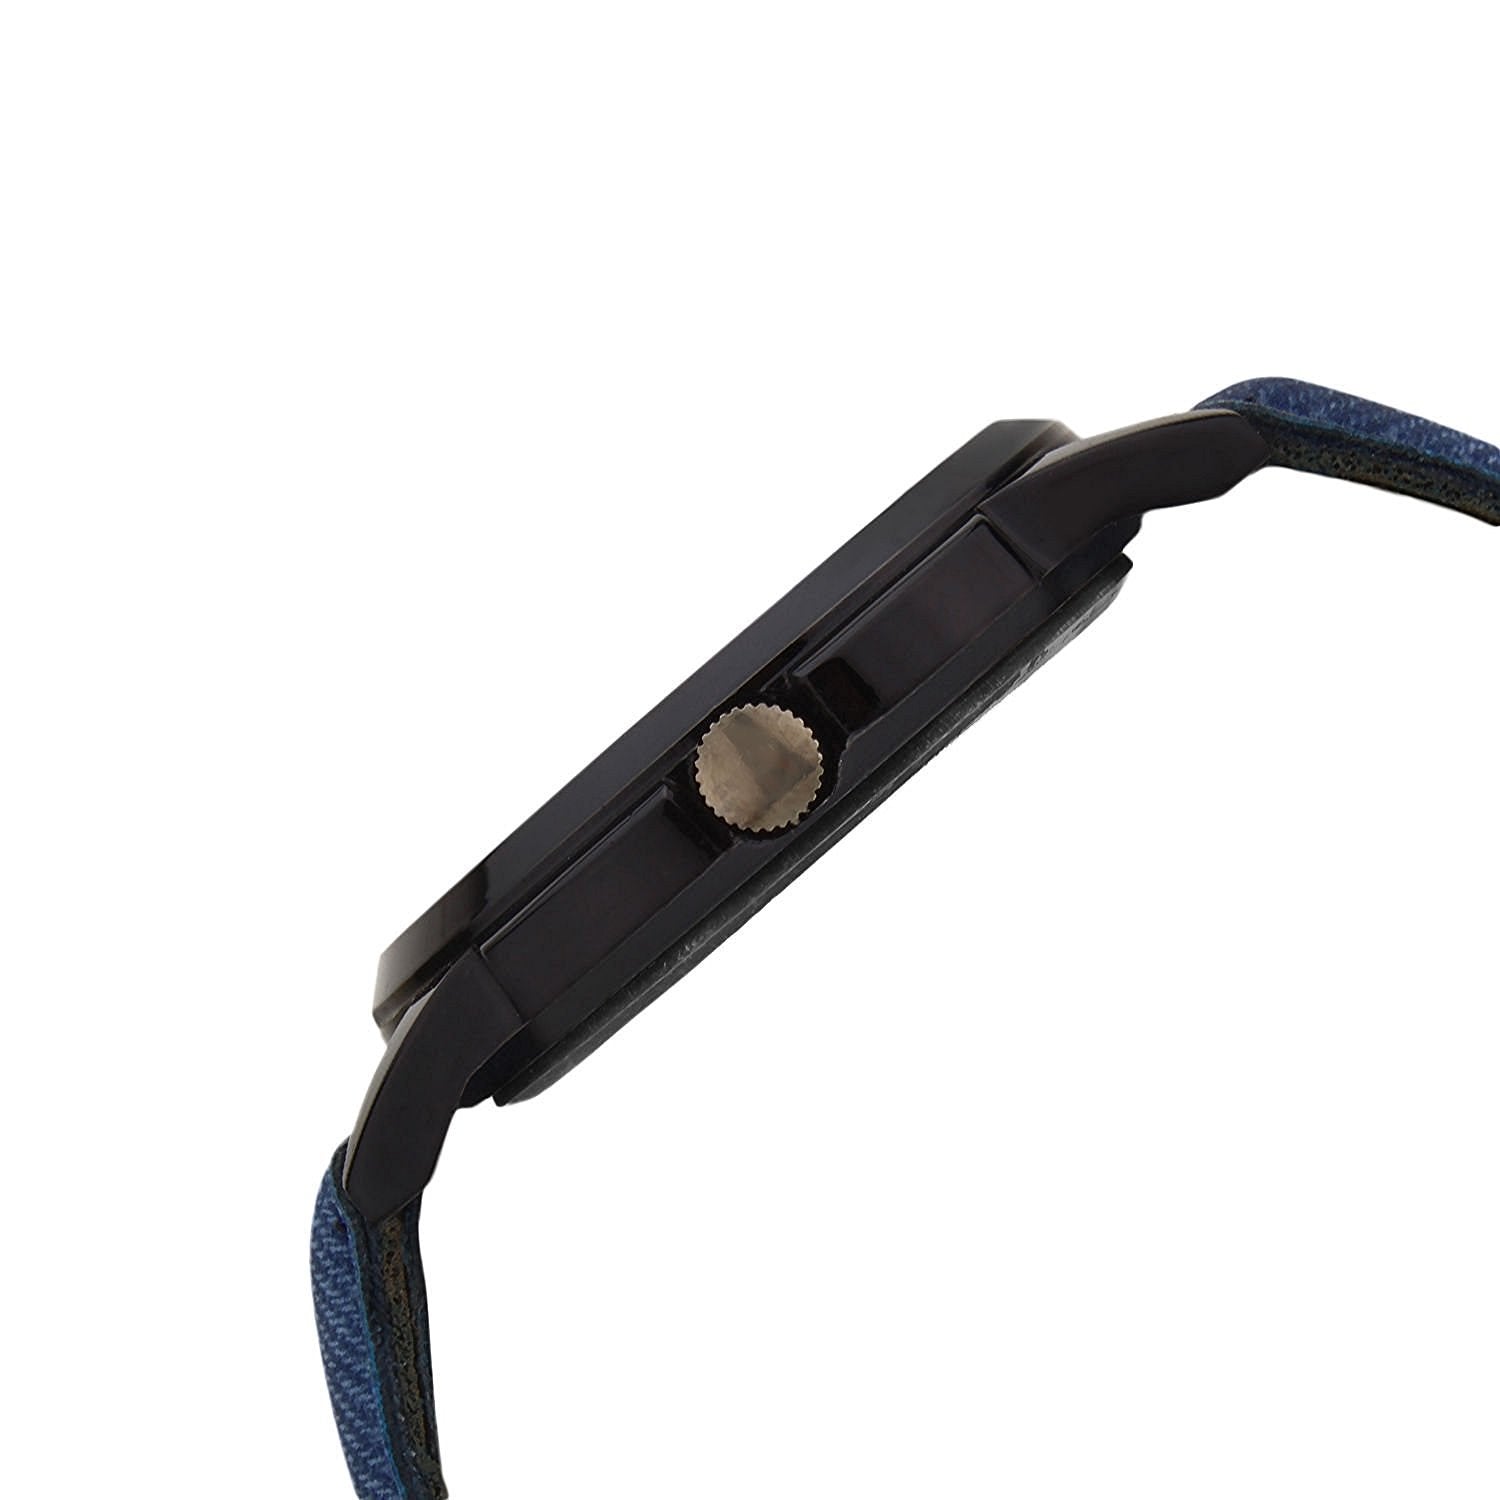 Lorenz CM-105WL-05 Combo of Men's Black Dial Analogue Watch and Blue Denim Wallet - Lorenz Fashion